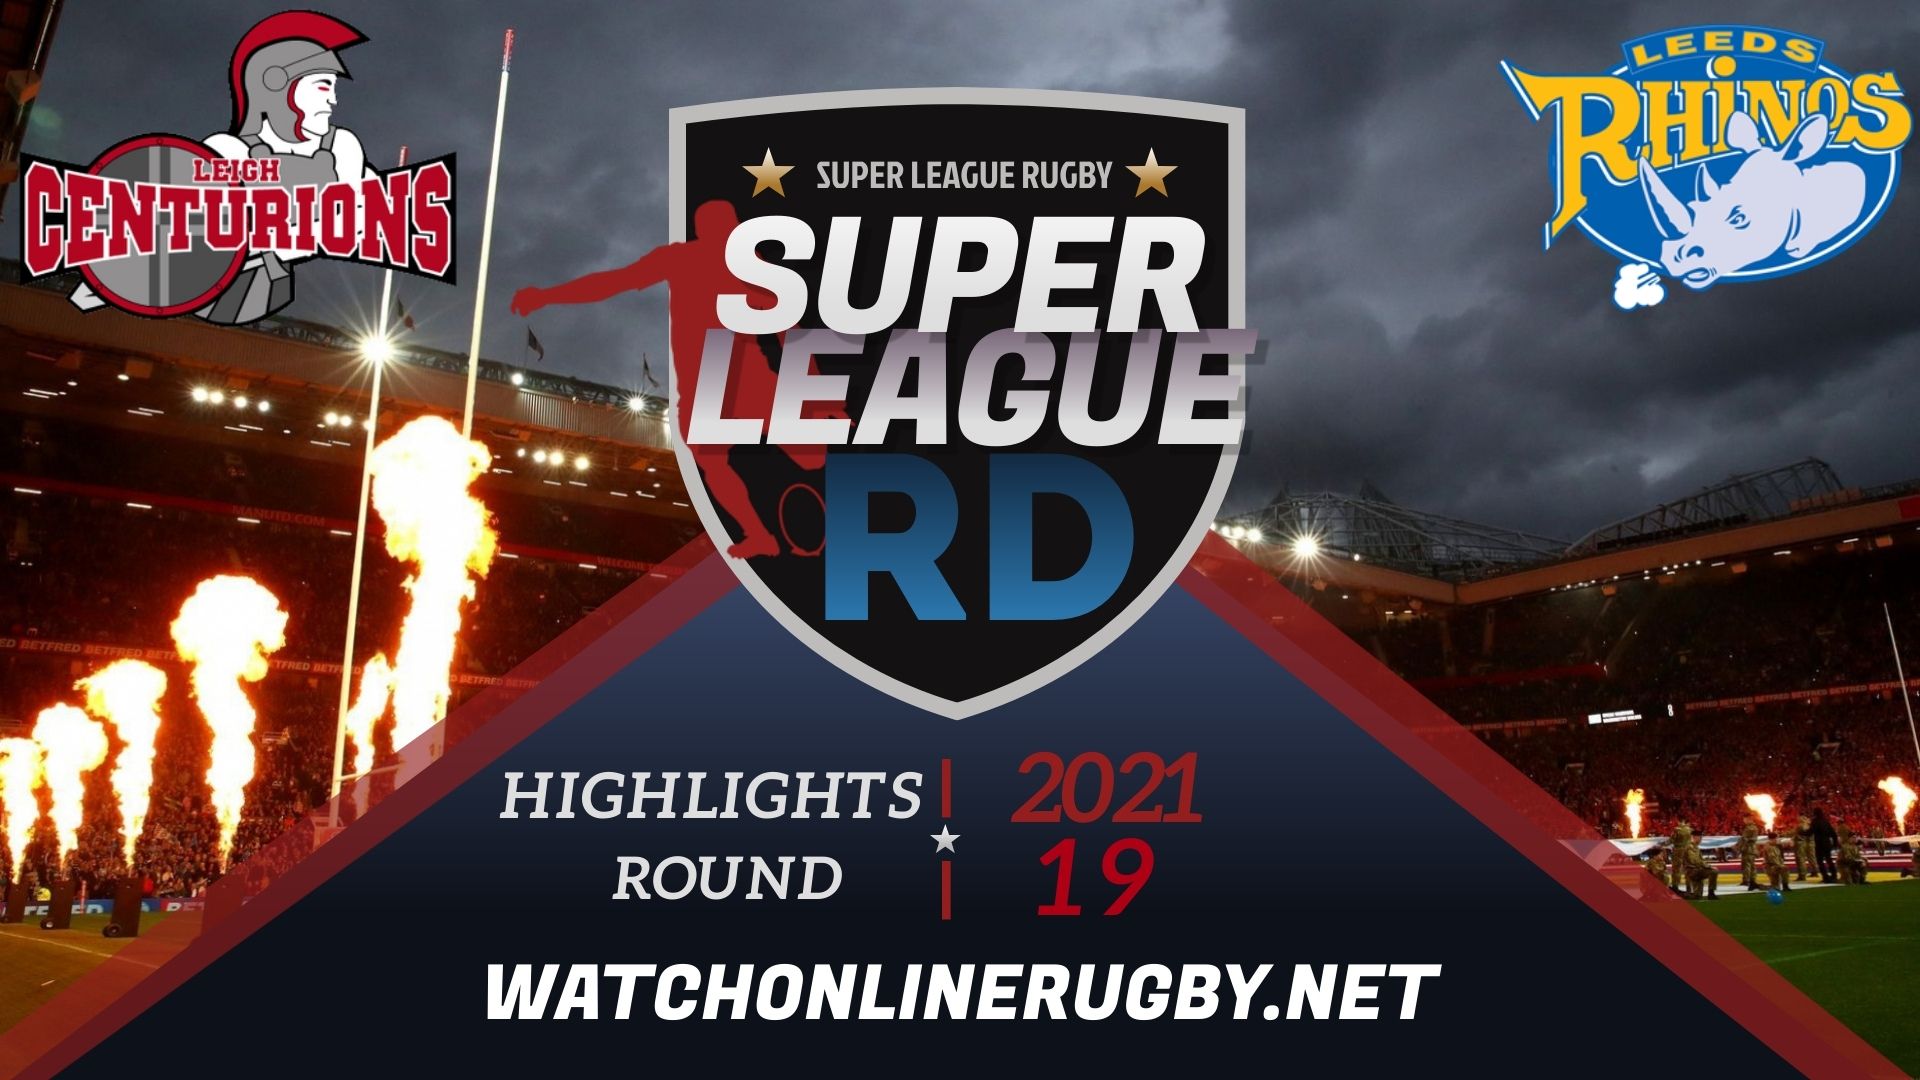 Leigh Centurions Vs Leeds Rhinos Super League Rugby 2021 RD 19